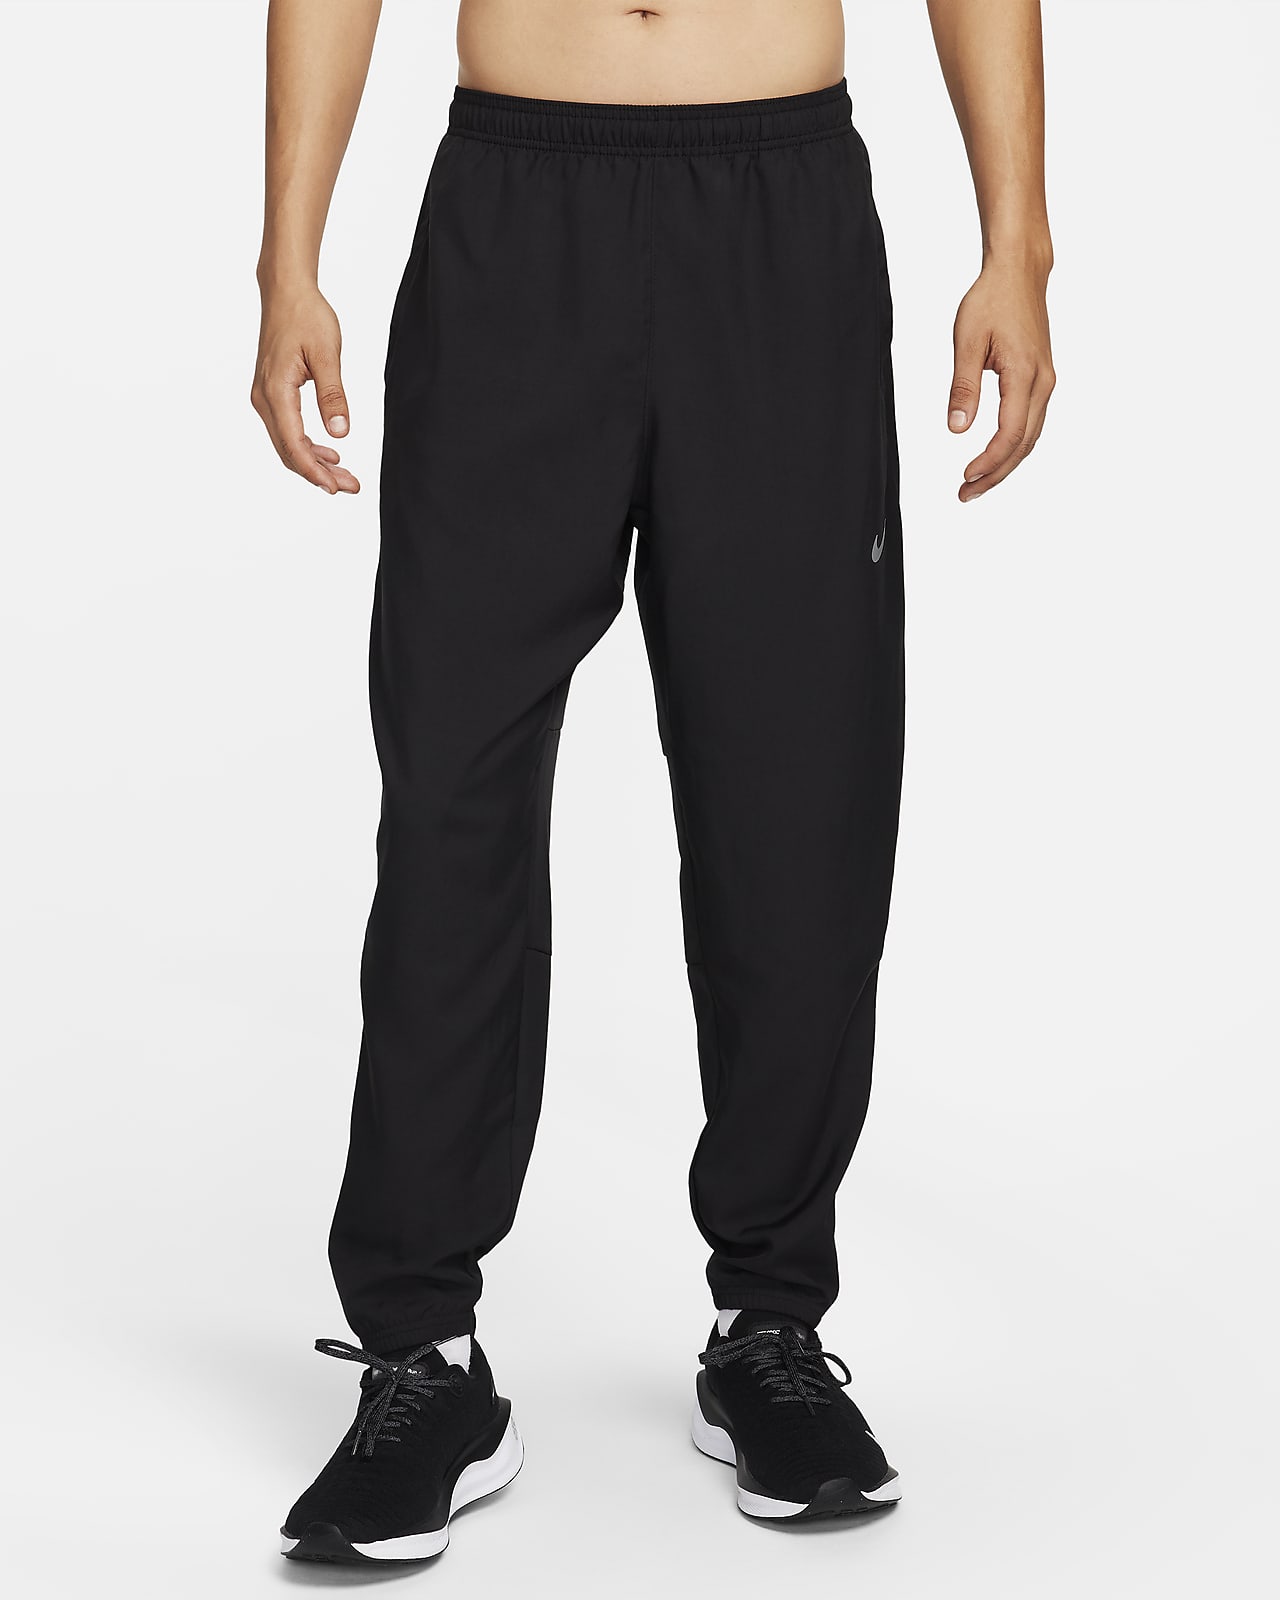 Nike Dri-Fit Challenger Woven Running Pants Men - black/reflective silver  DD4894-010